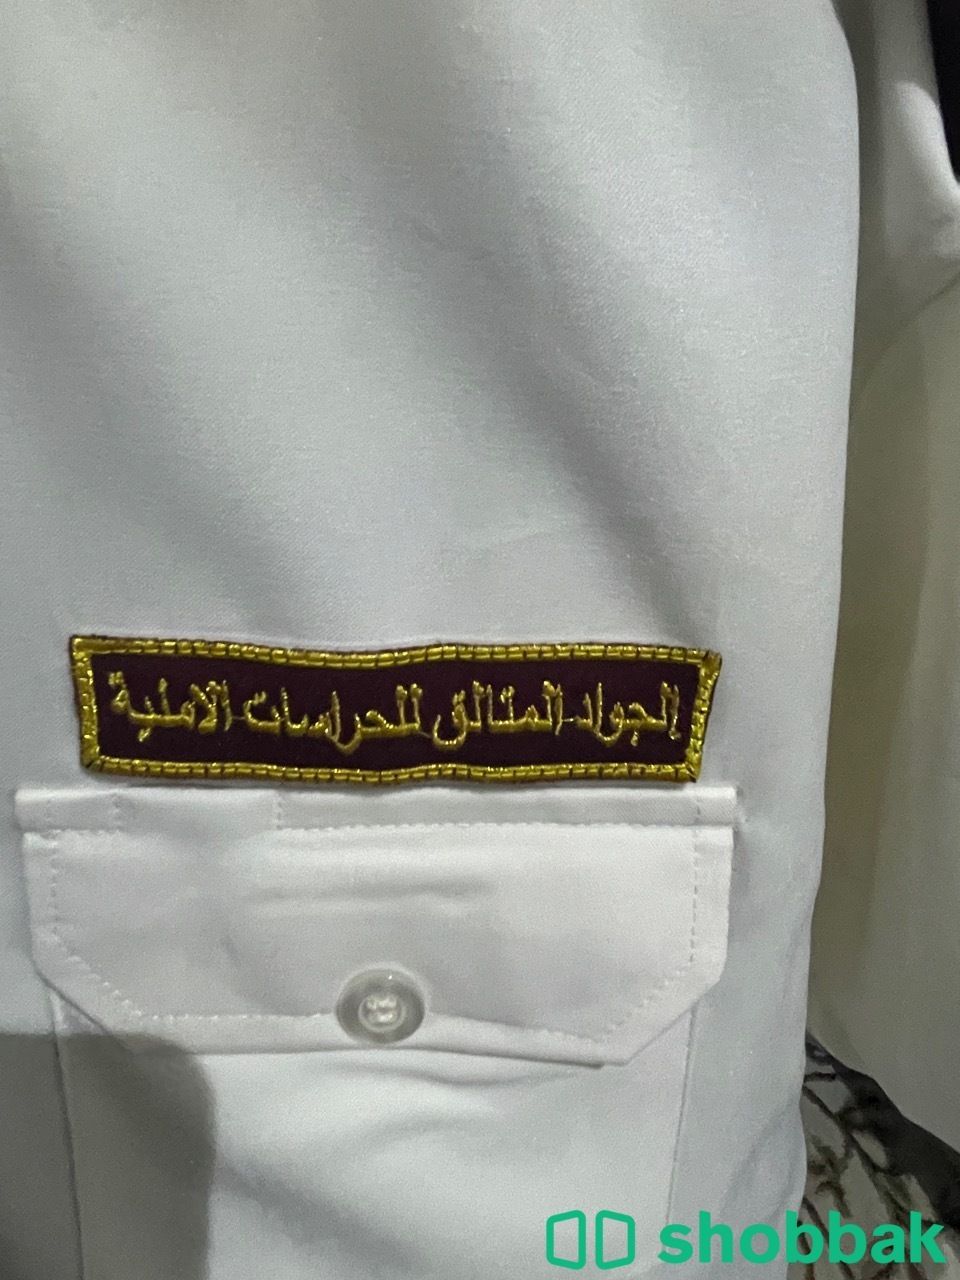 لبس حارس امن مقاس XL Shobbak Saudi Arabia